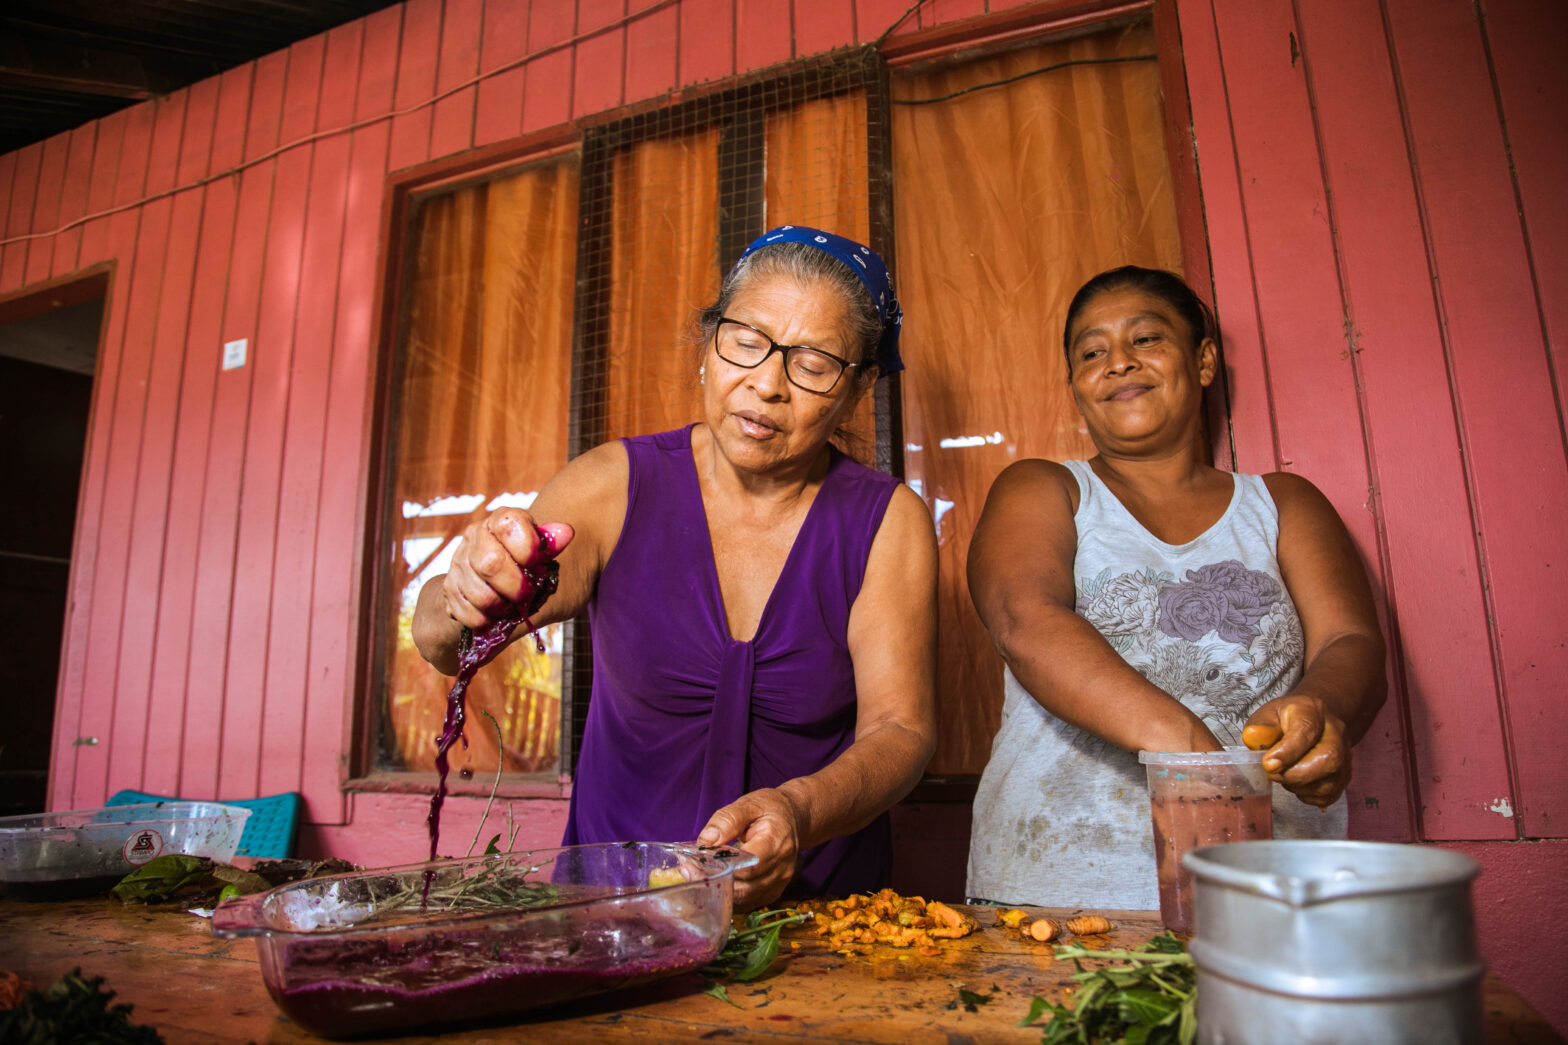 Boruca women in Costa Rica, Intrepid Travel